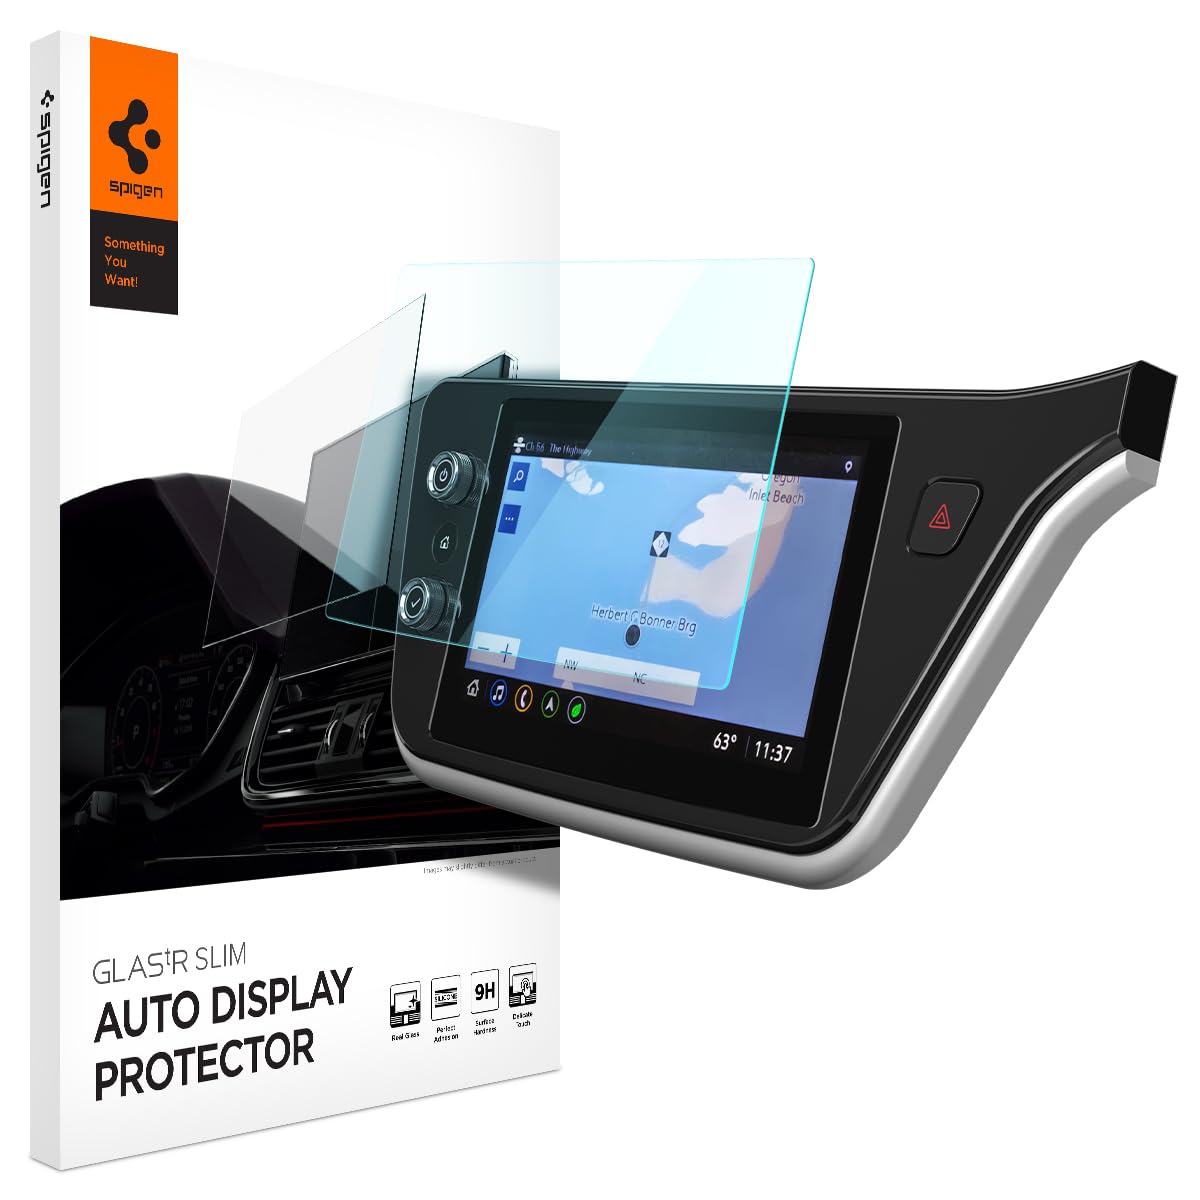 Spigen Tempered Glass Screen Protector [GlasTR Slim] designed for Chevrolet Bolt EV (2022/2023/2024),Chevrolet Bolt EUV (2022/2023/2024) 10.2 inch Dashboard Touchscreen - Crystal Clear